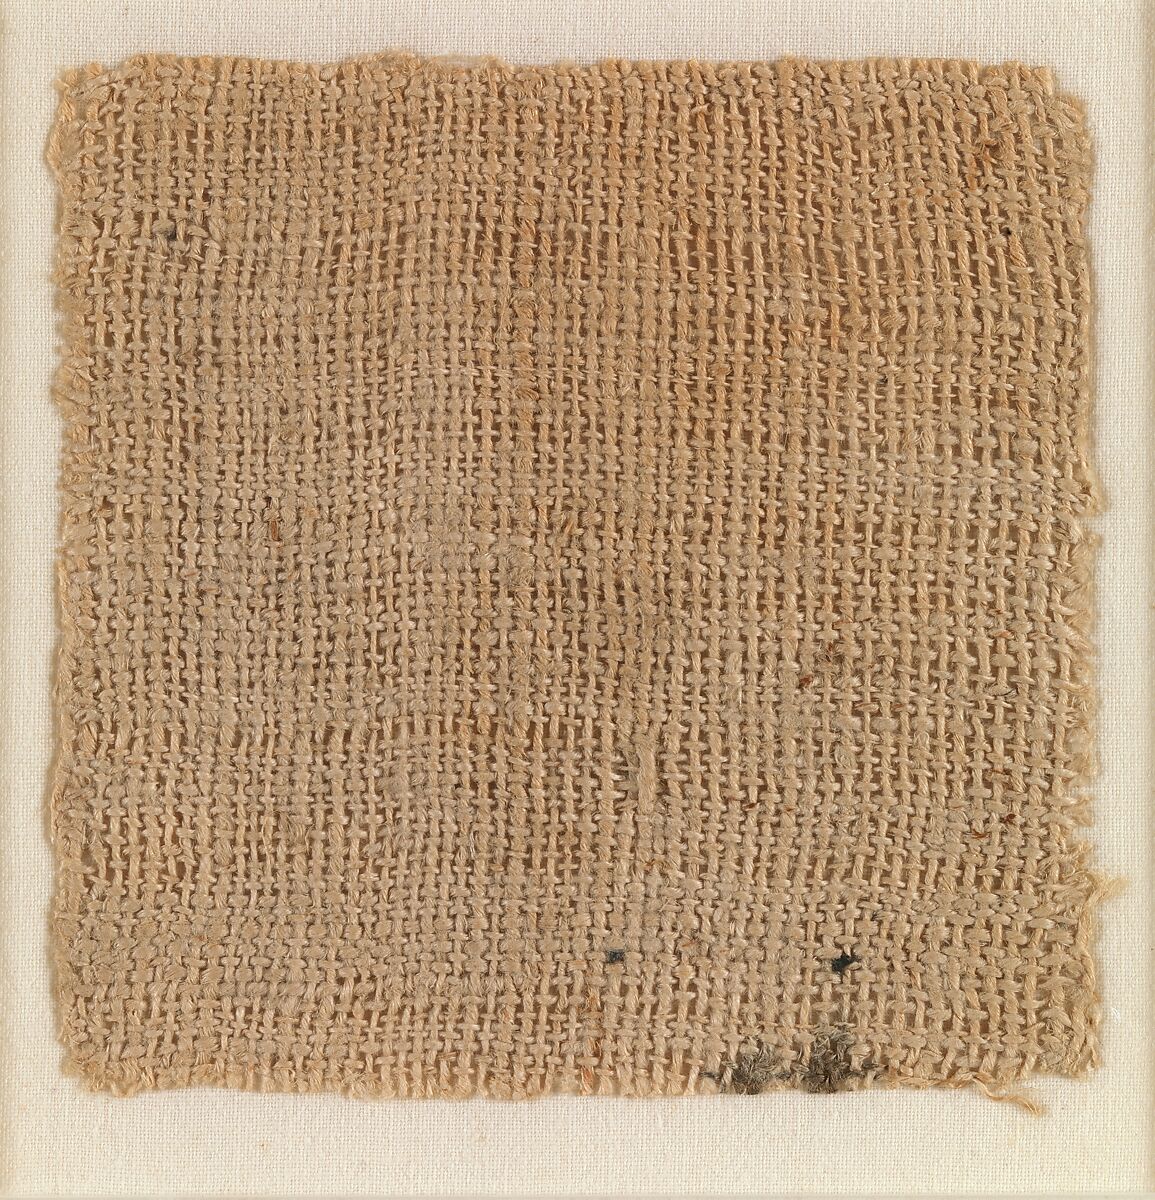 Sample of Cloth, Linen 